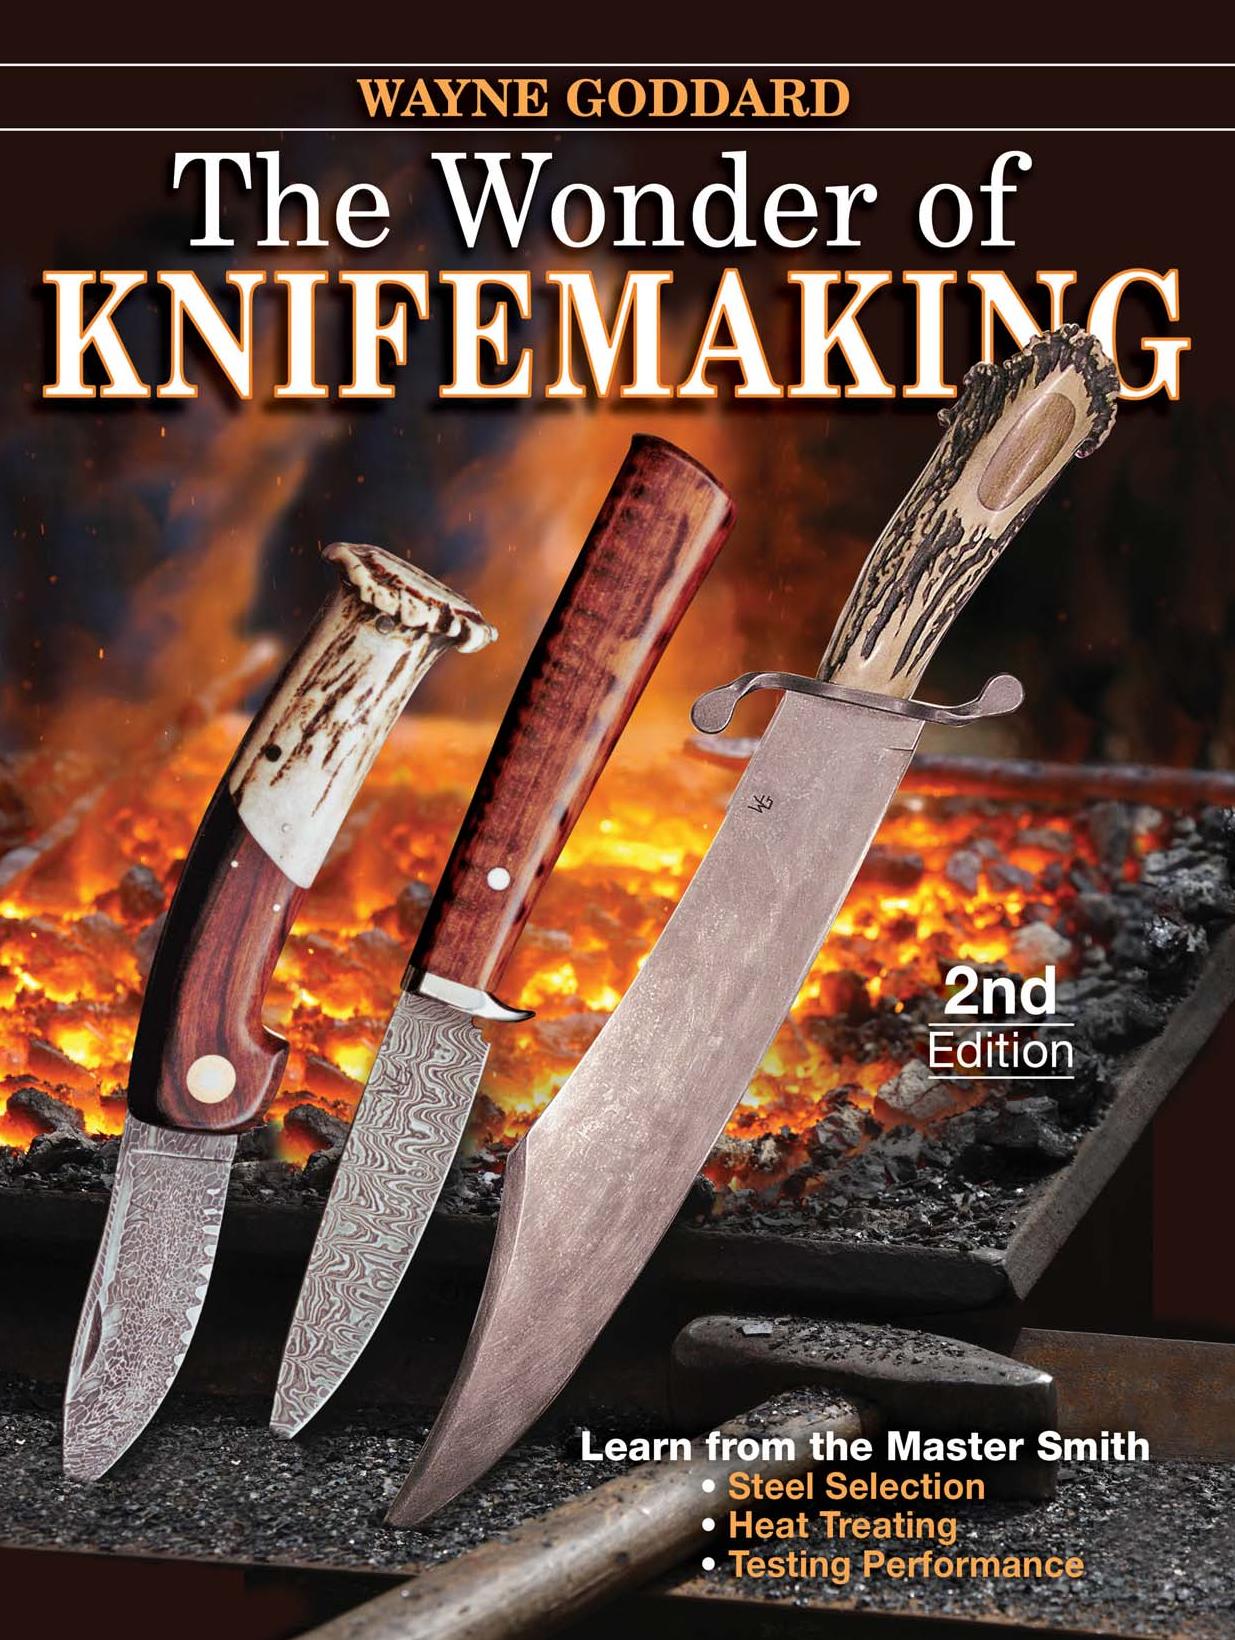 The Wonder of Knifemaking by Wayne Goddard